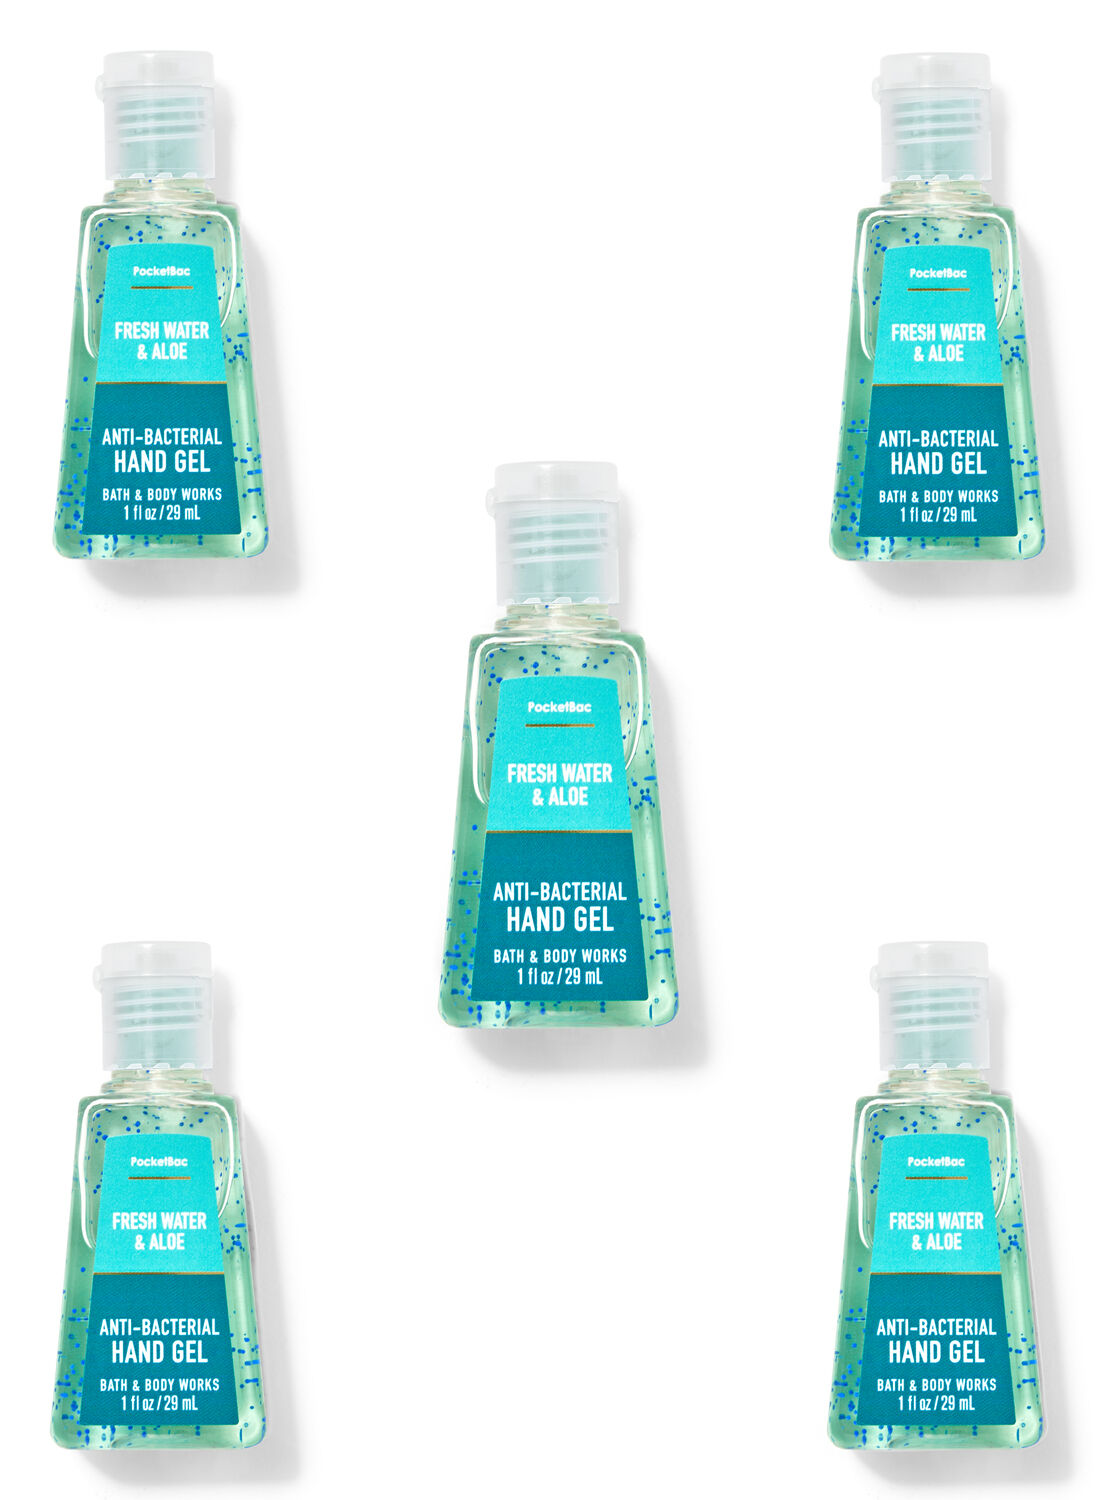 Fresh Water & Aloe PocketBac Hand Sanitizer, 5-Pack